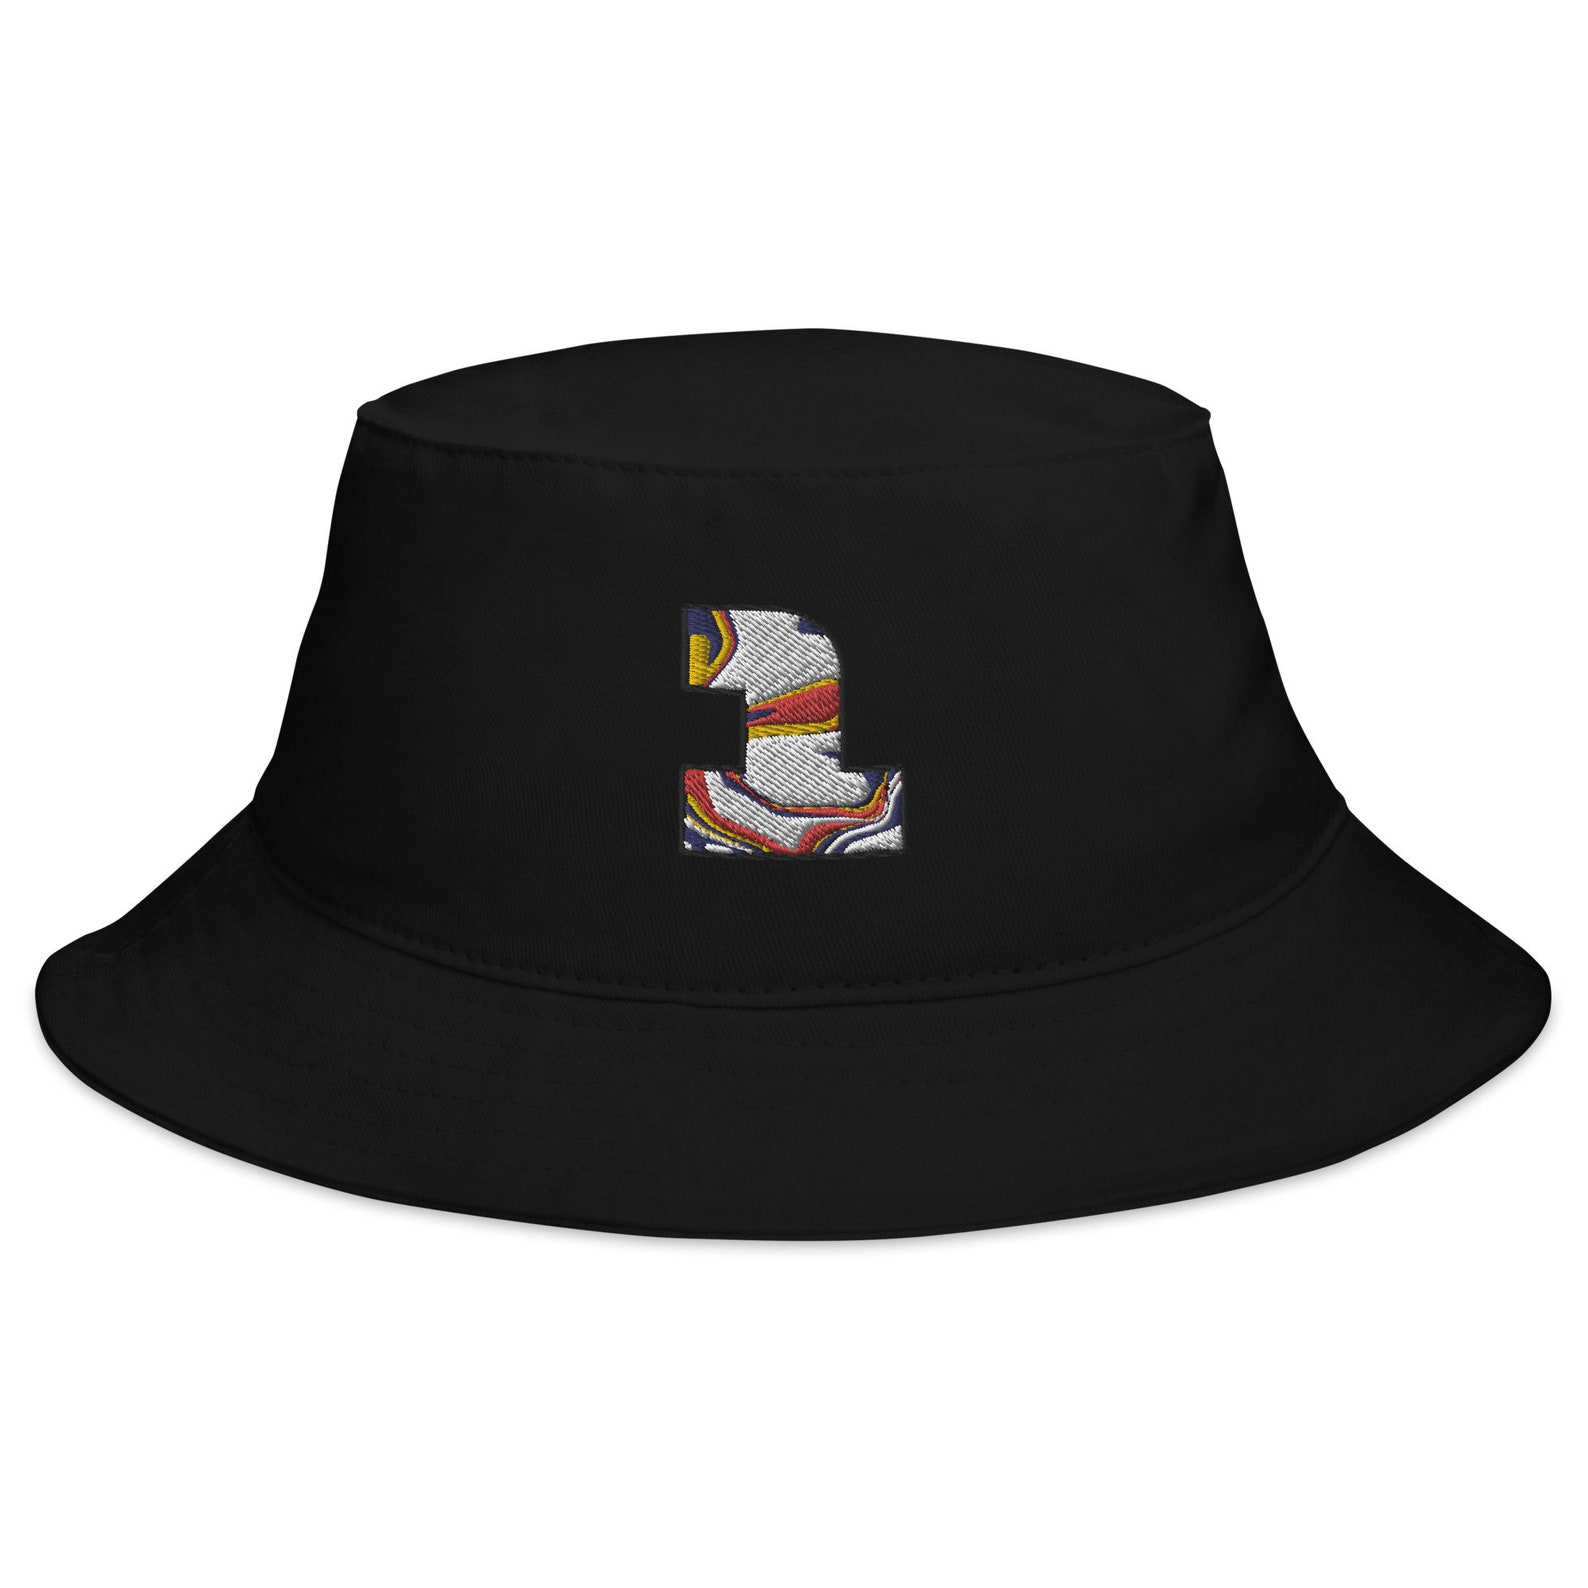 Max Verstappen 2022 Livery Inspired 1 Bucket Hat - Etsy